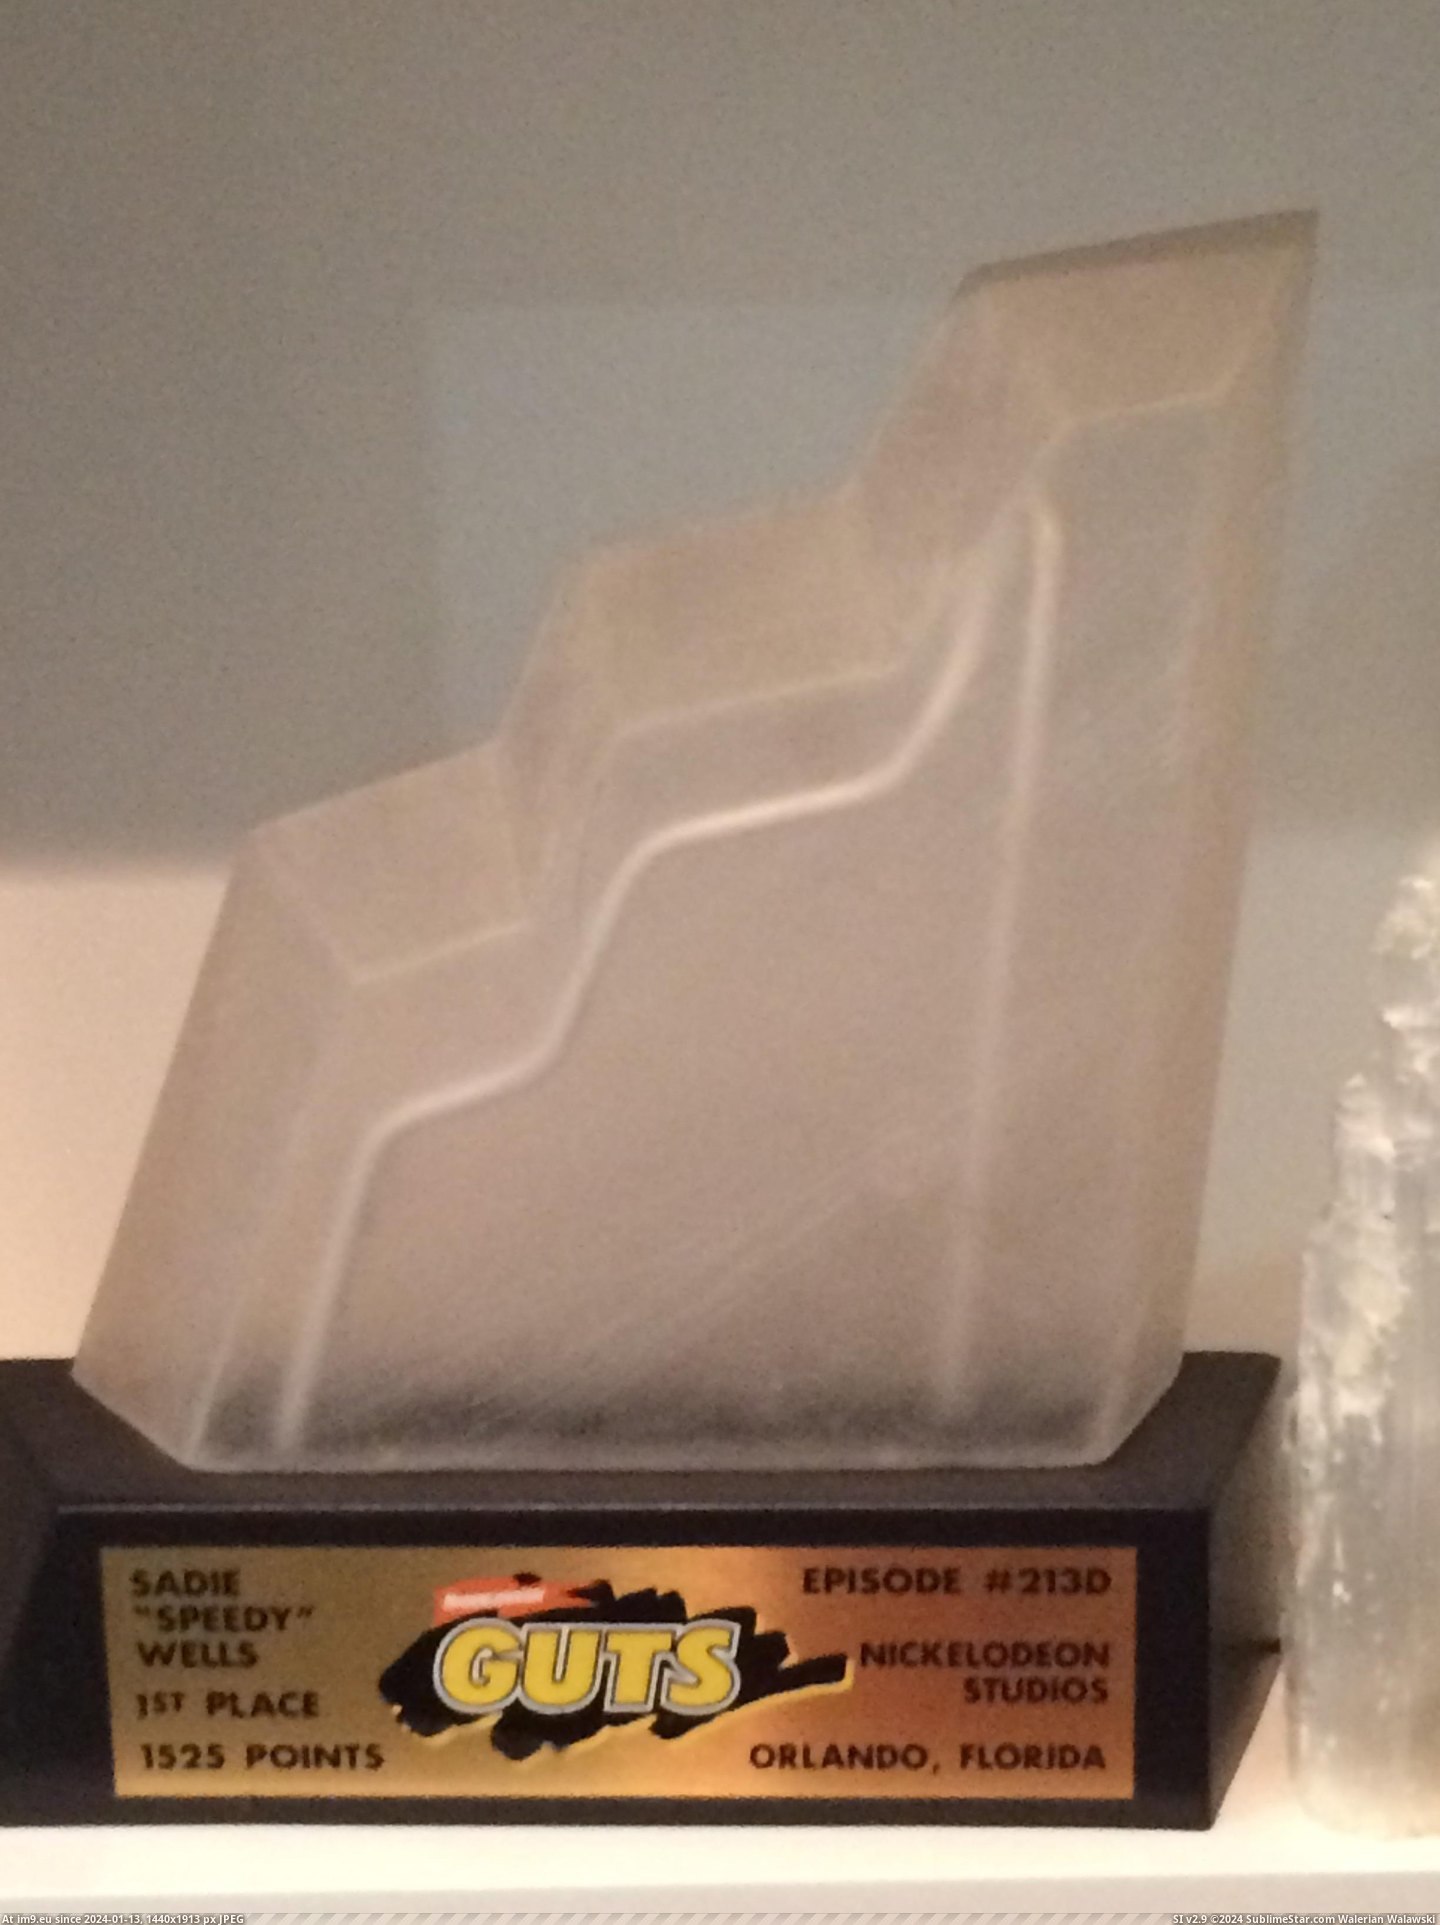 #Good #Husband #Doctor #Display #Award #Office #Hands [Pics] My husband just sent me this award on display at his doctor's office. I think he's in good hands. Pic. (Bild von album My r/PICS favs))